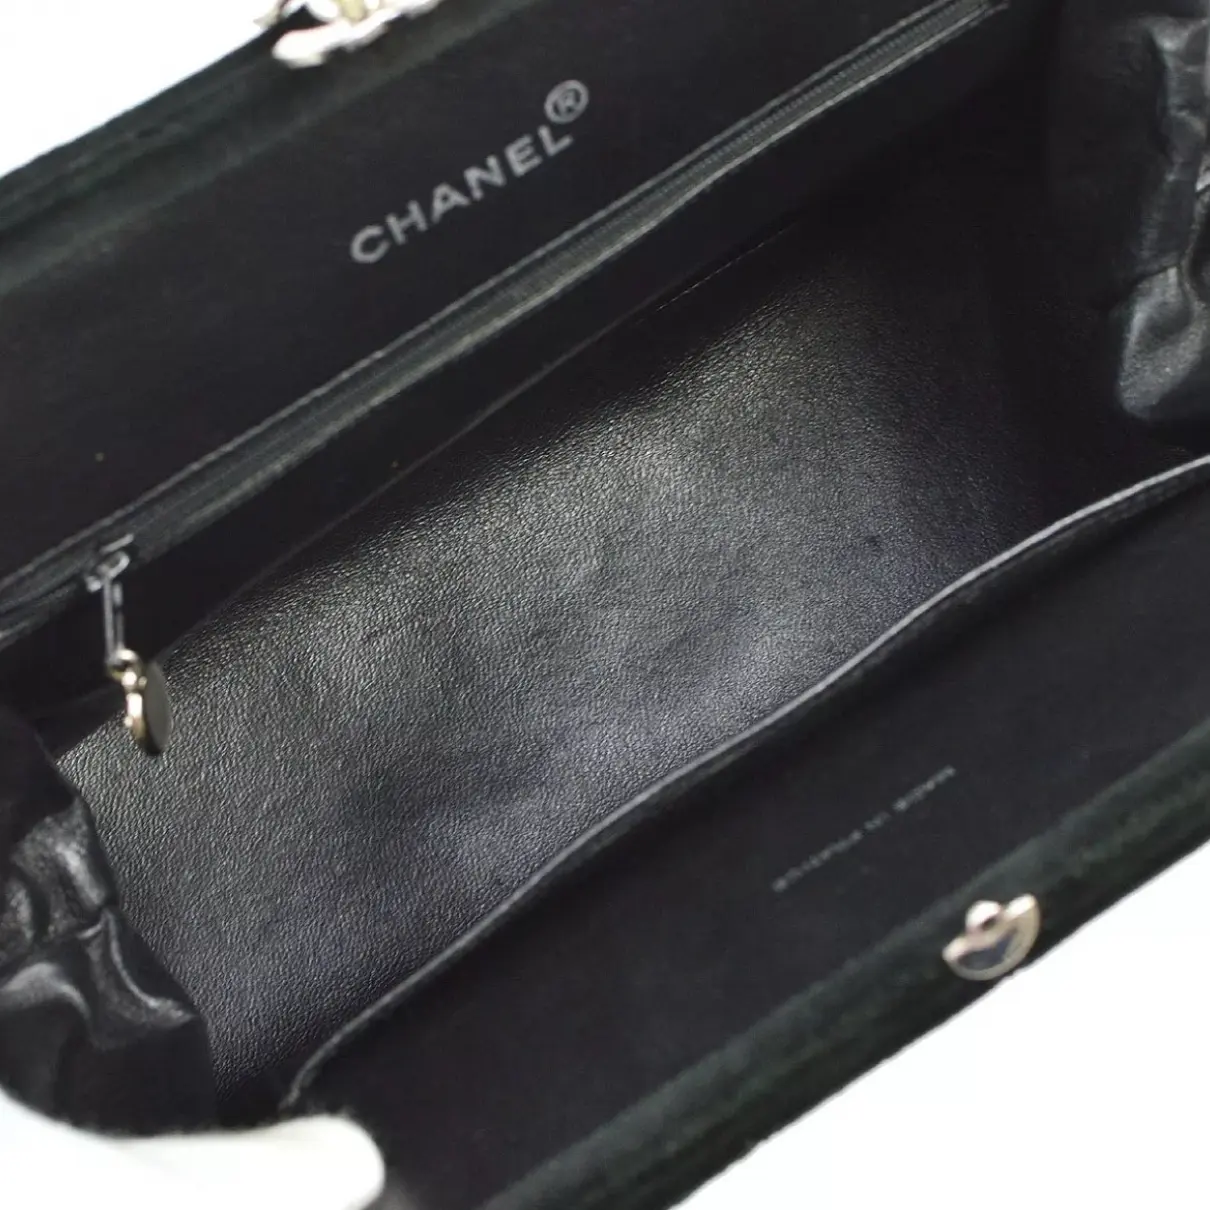 Buy Chanel Petite Shopping Tote velvet tote online - Vintage